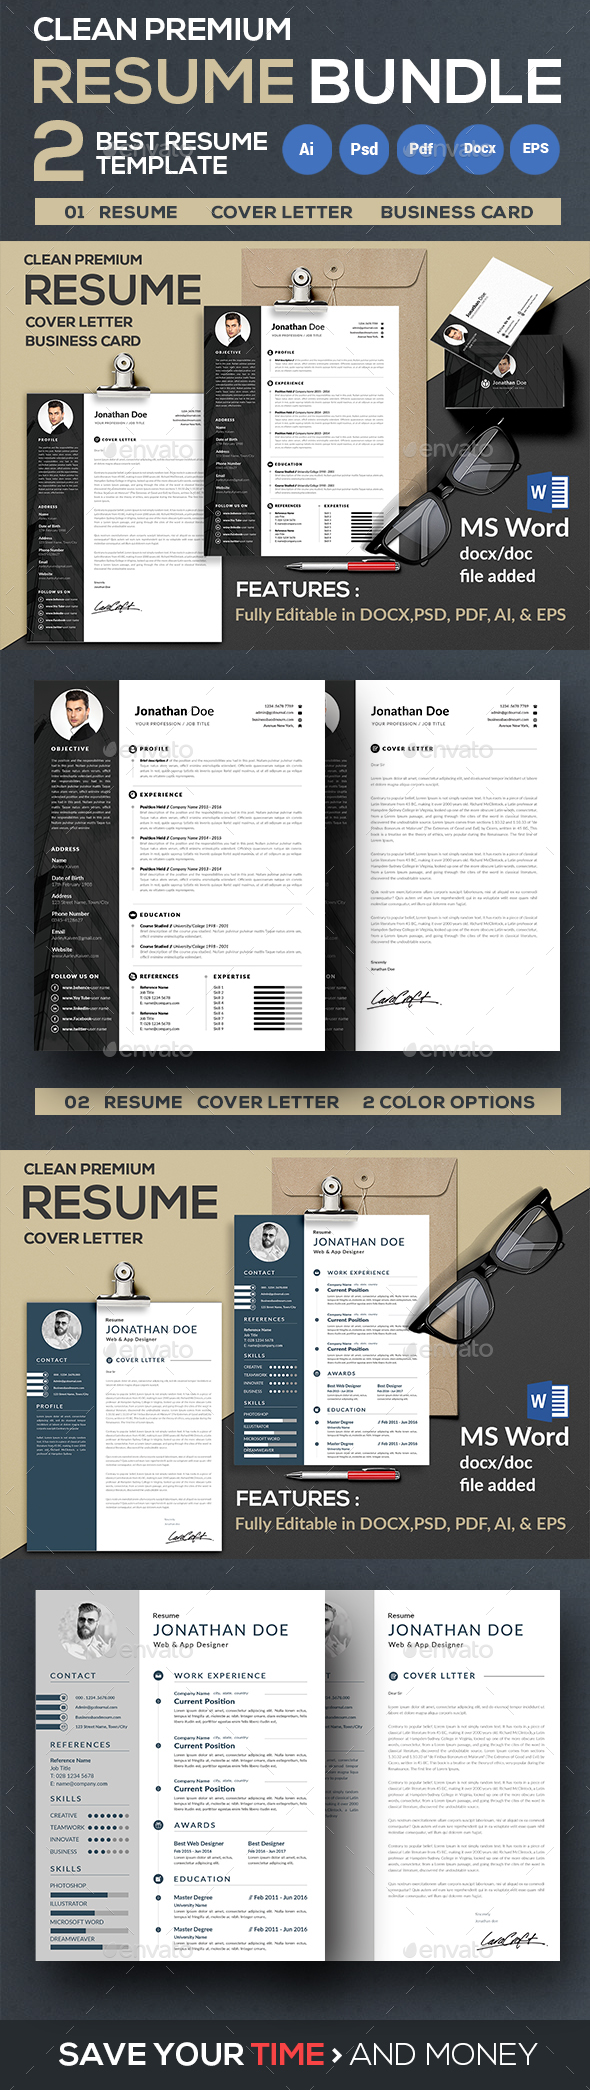 Resume/CV Bundle